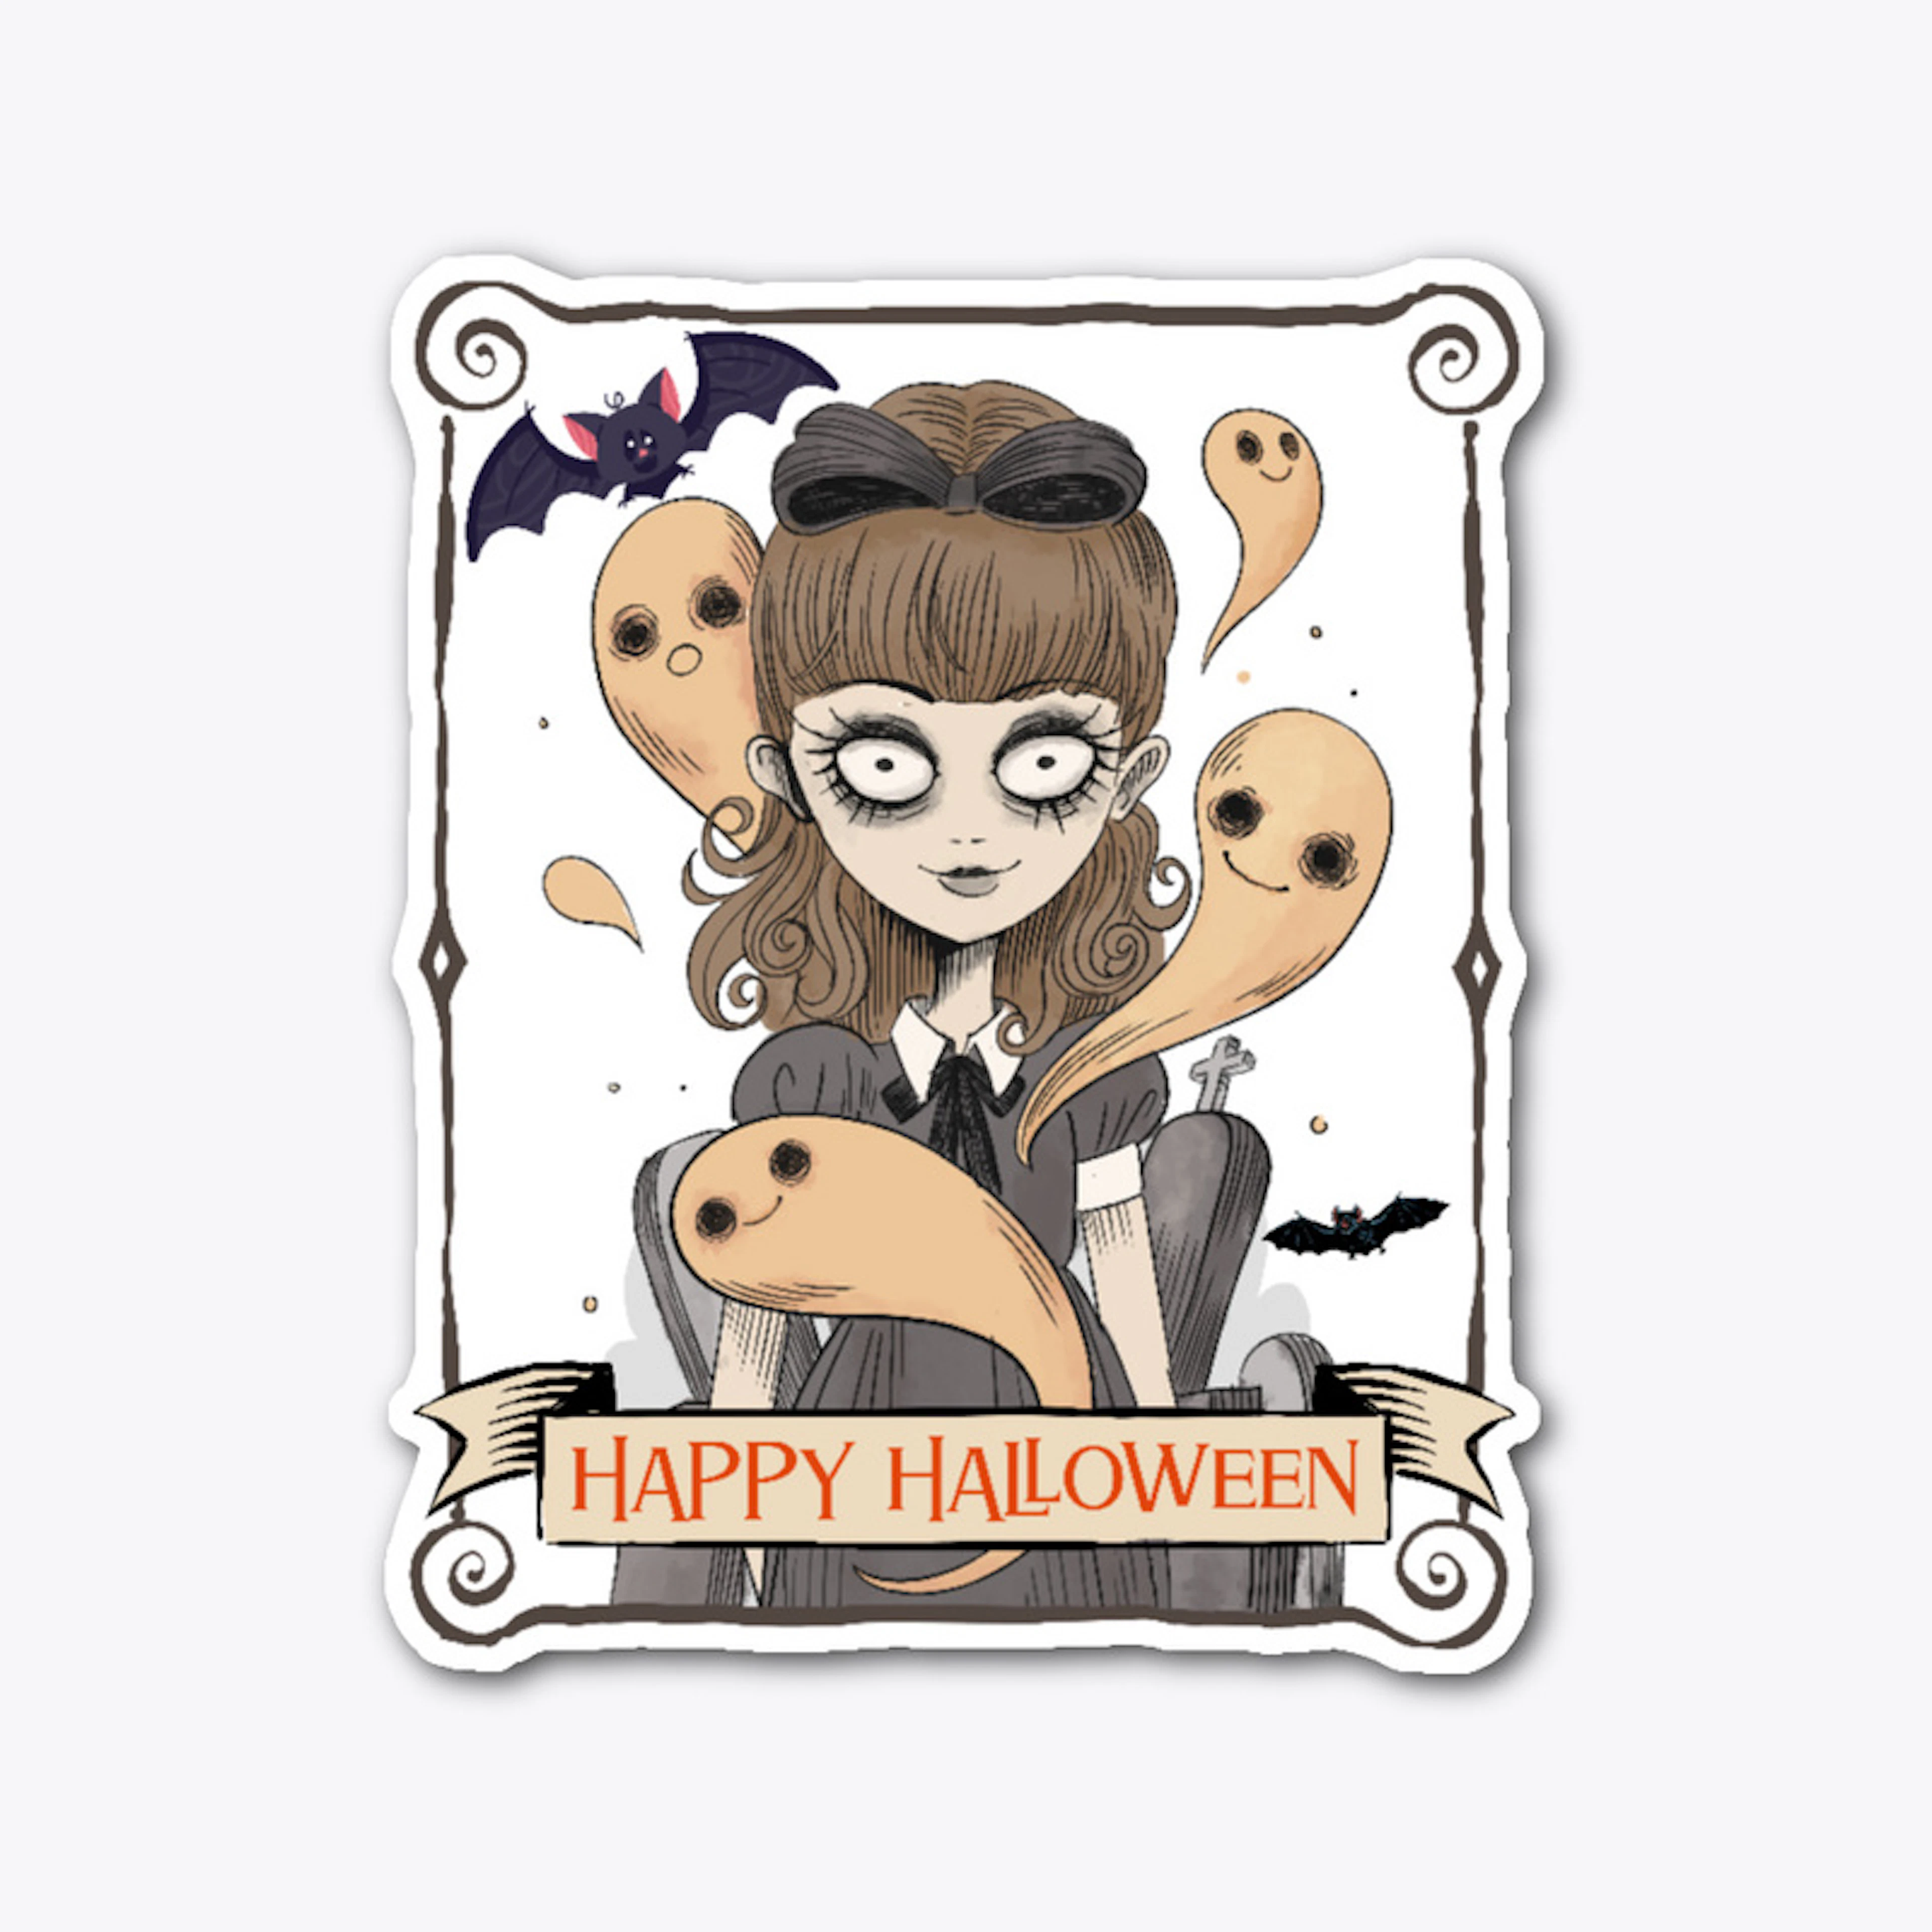 The Fab 10 "Halloween Creepy Goth"